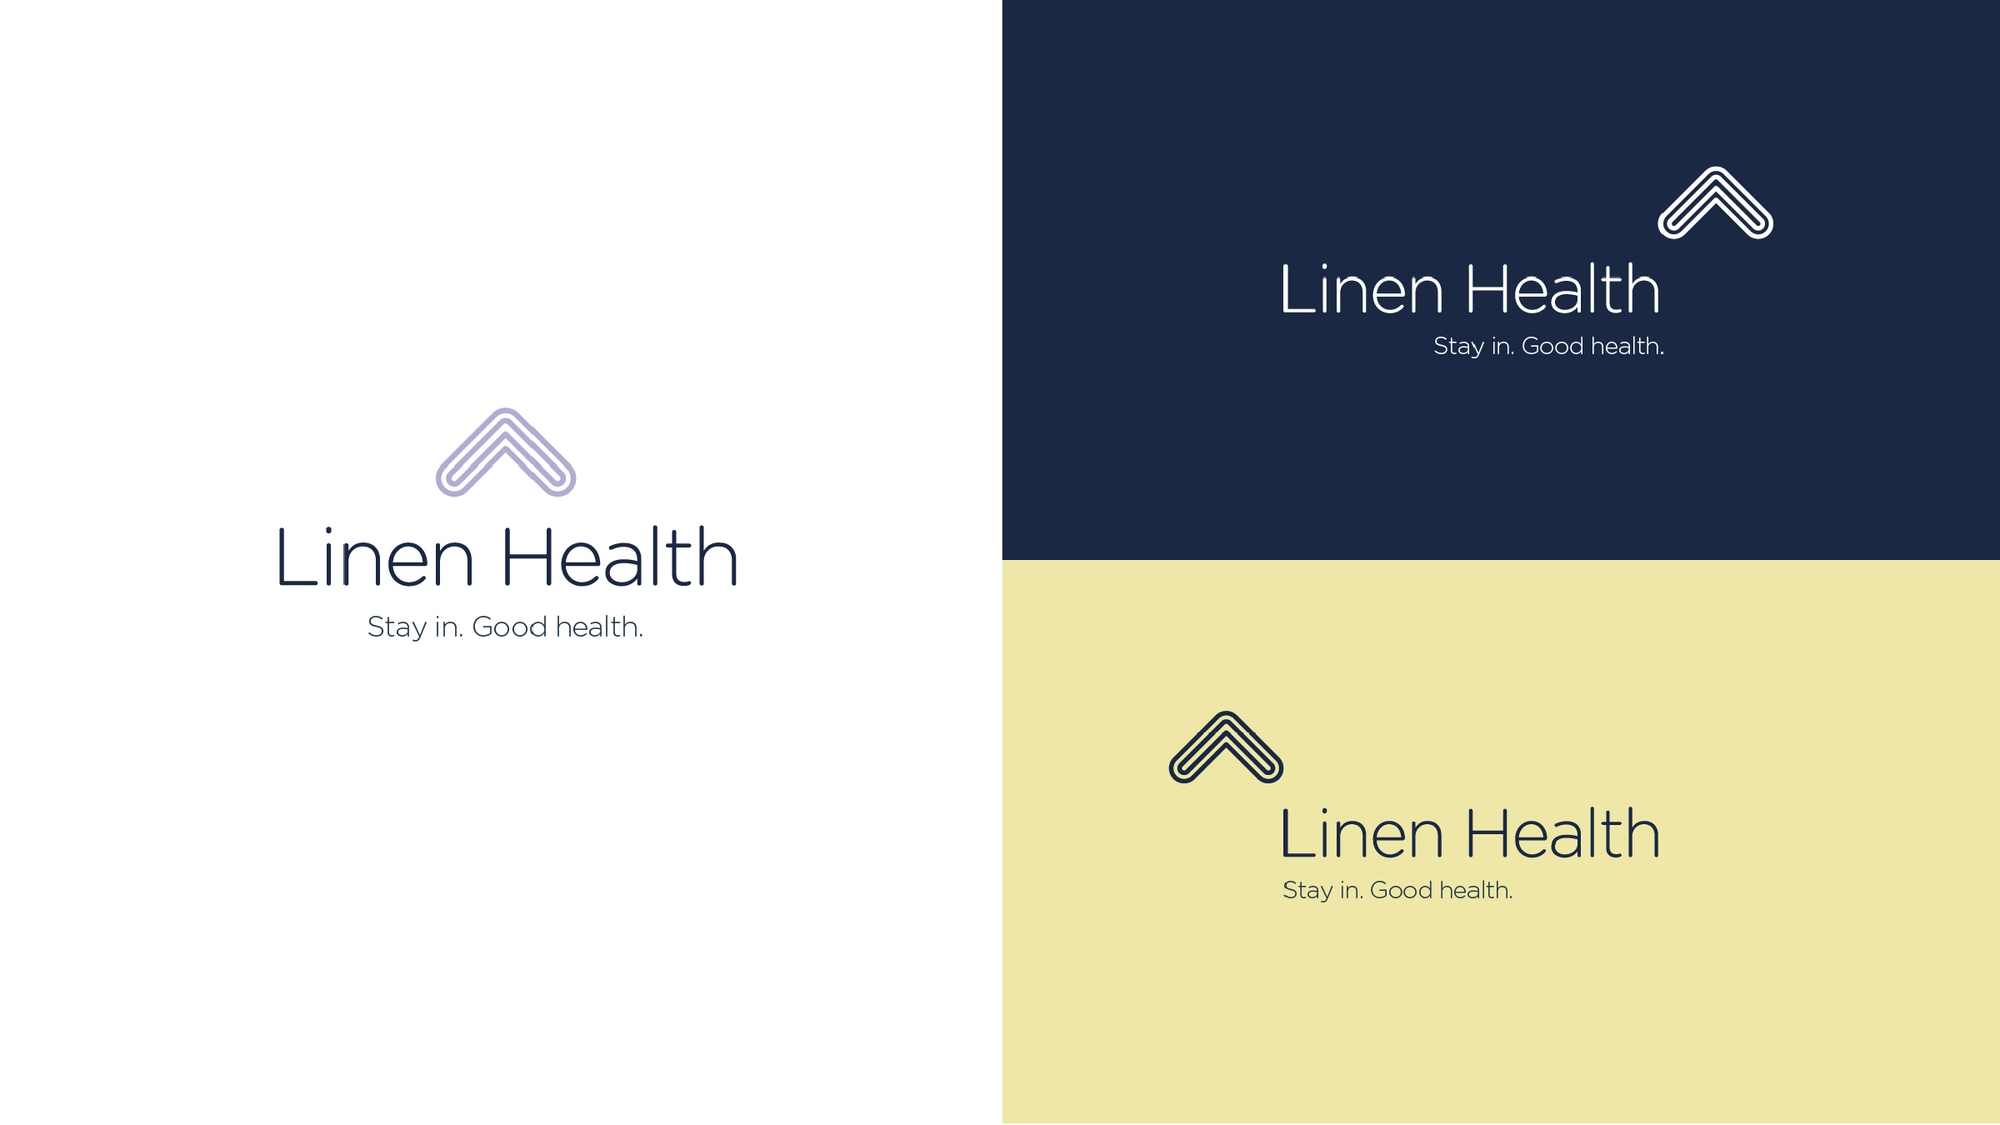 Linen Health 3-up logo